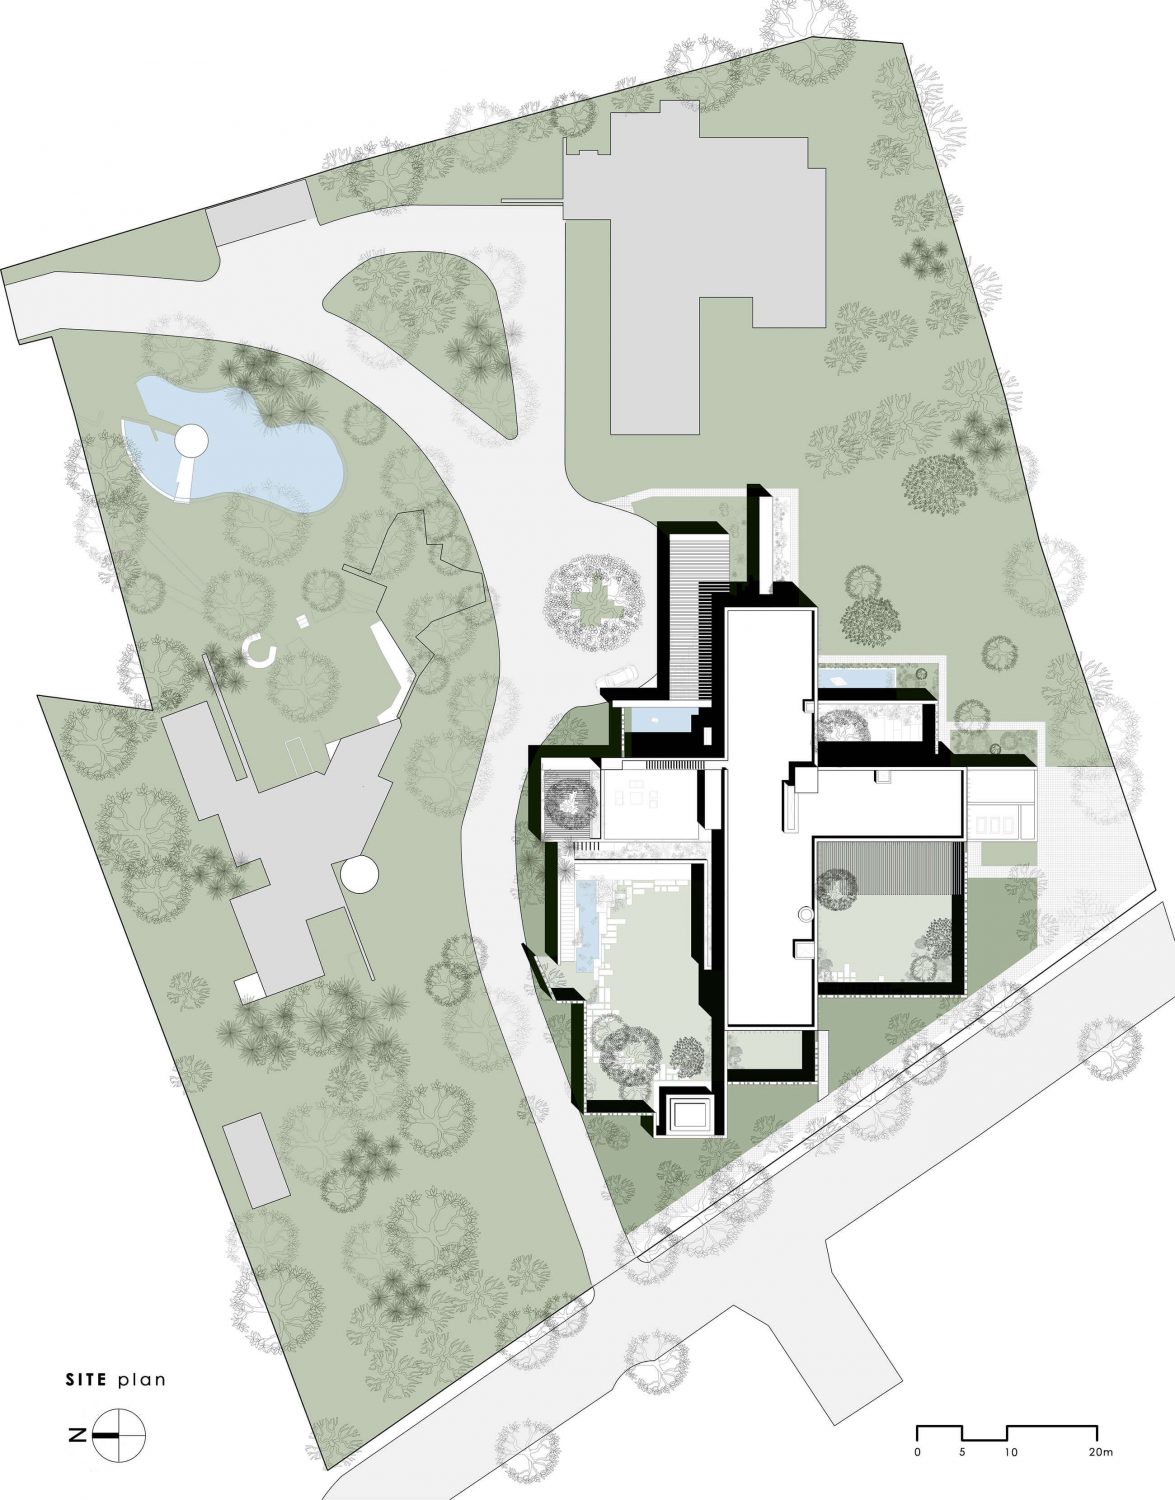 The House Of Secret Gardens by Spasm Design